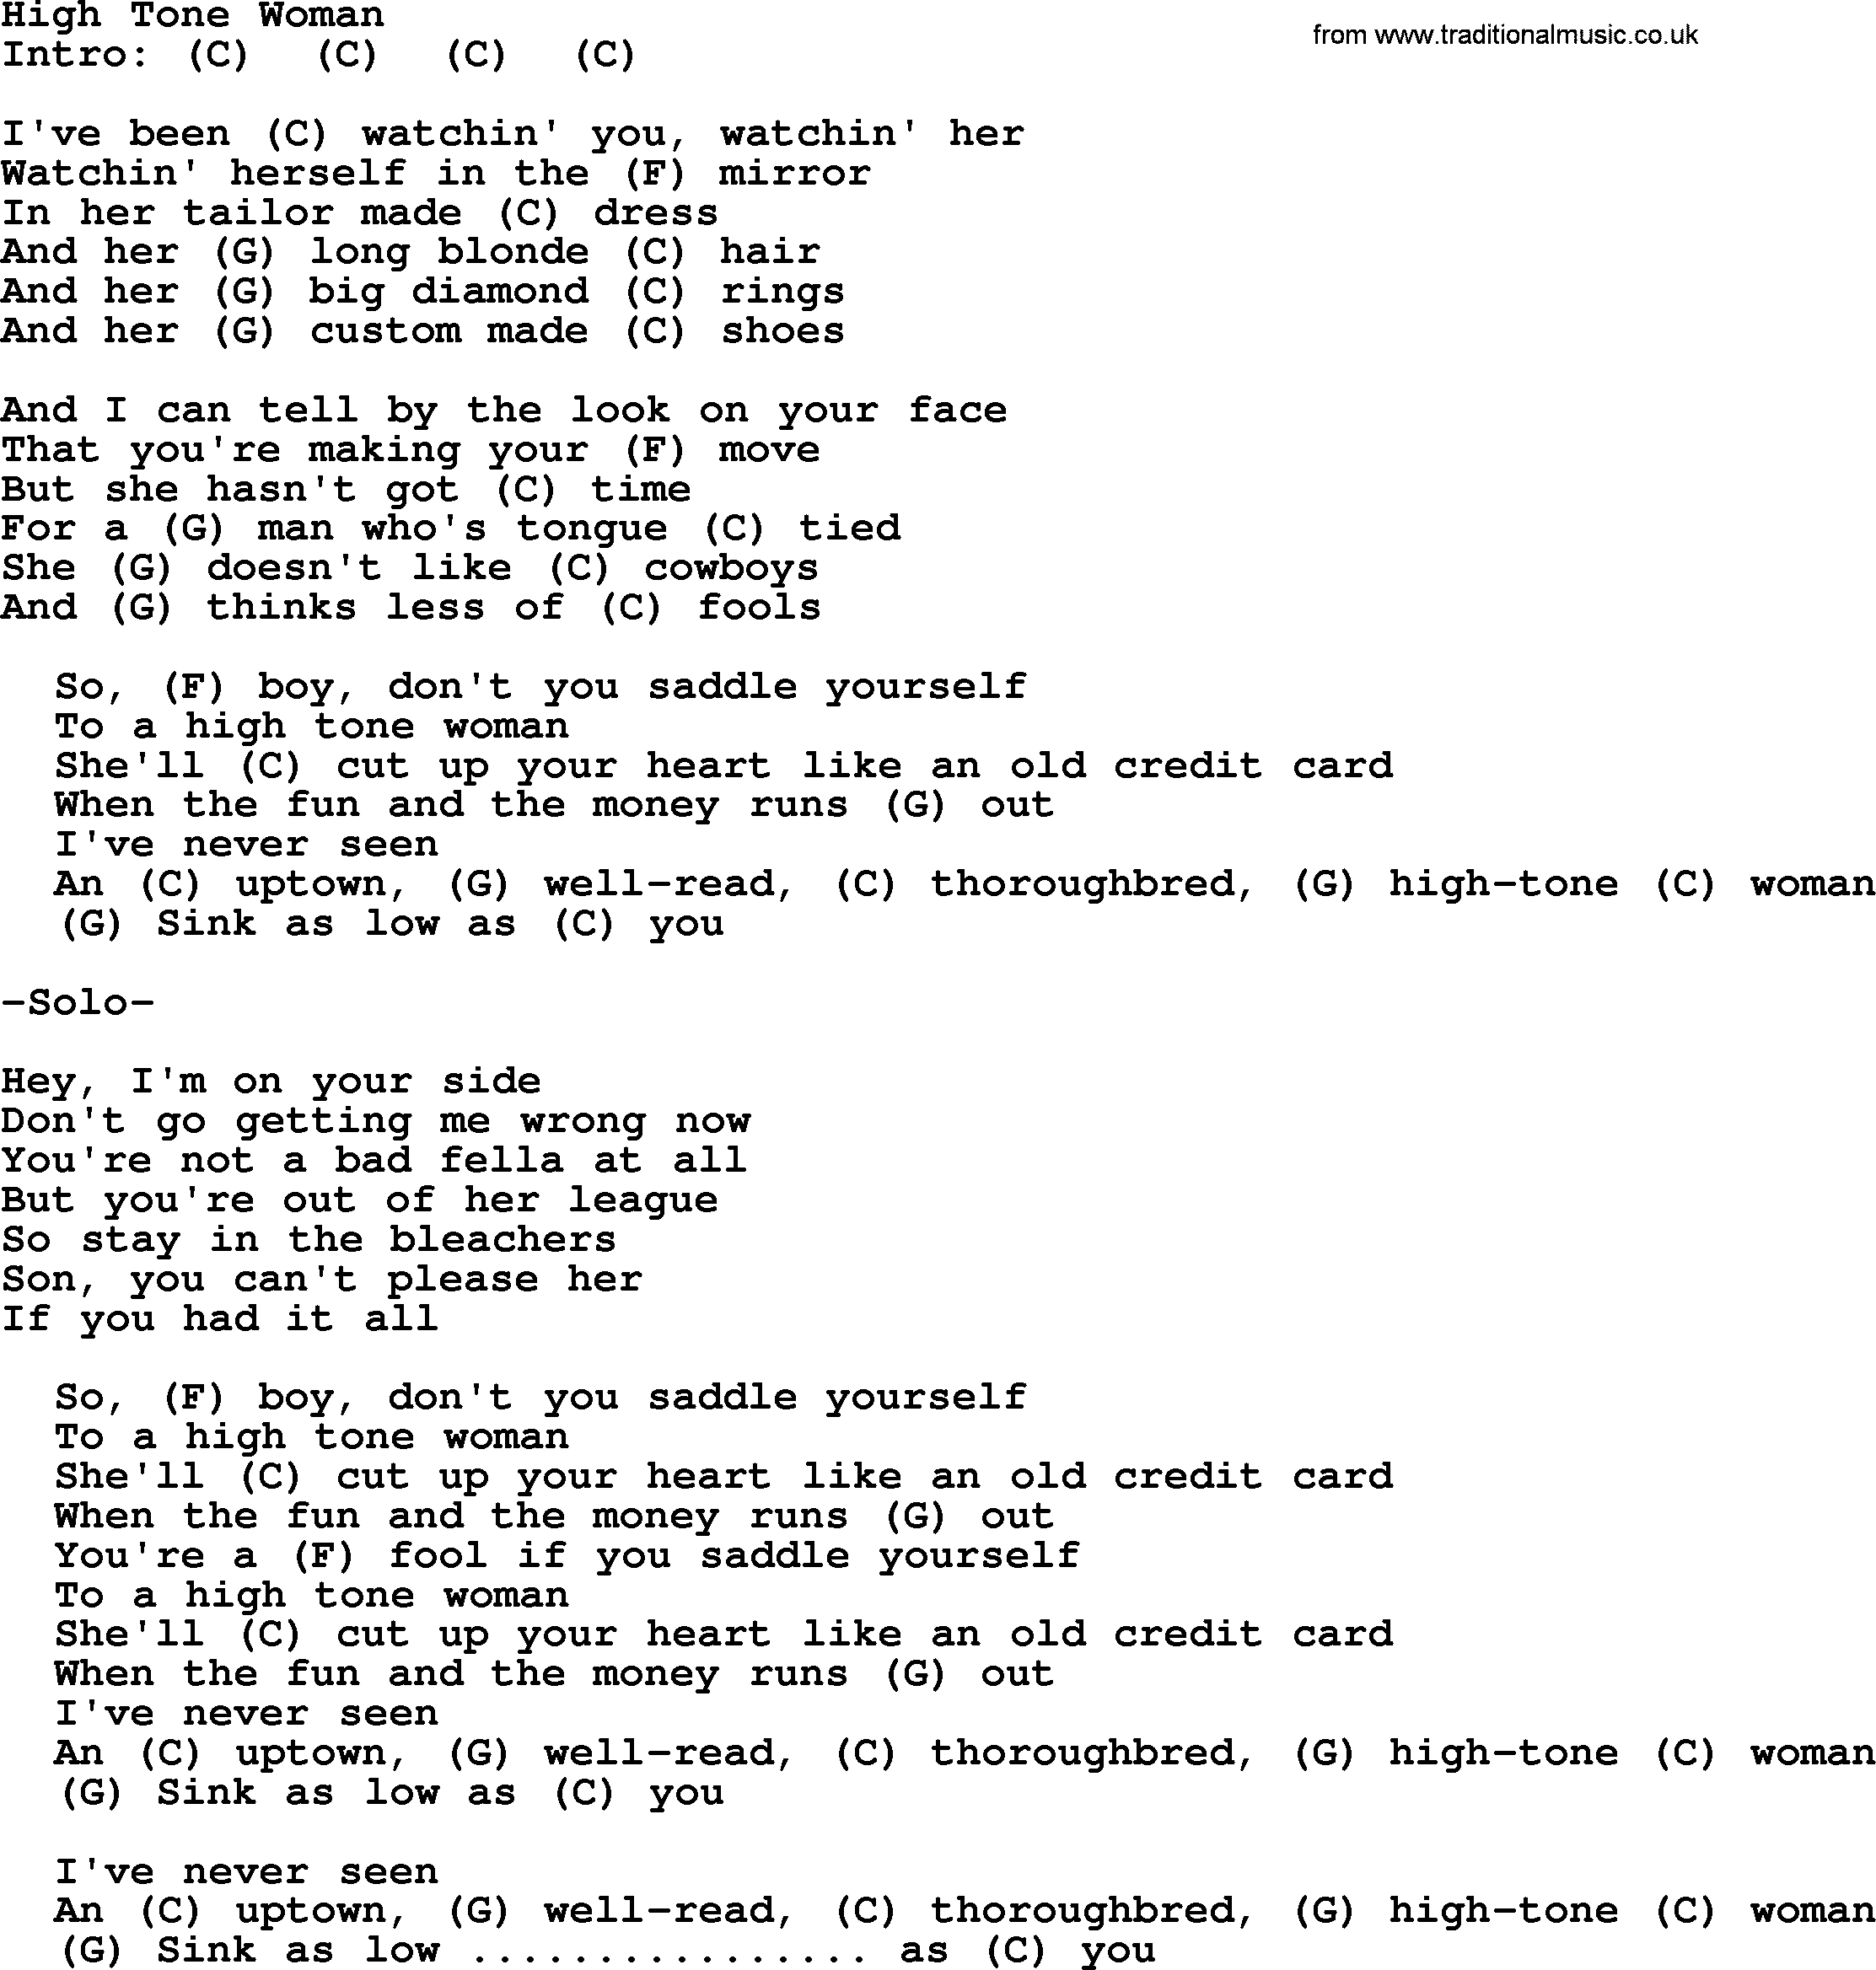 George Strait song: High Tone Woman, lyrics and chords